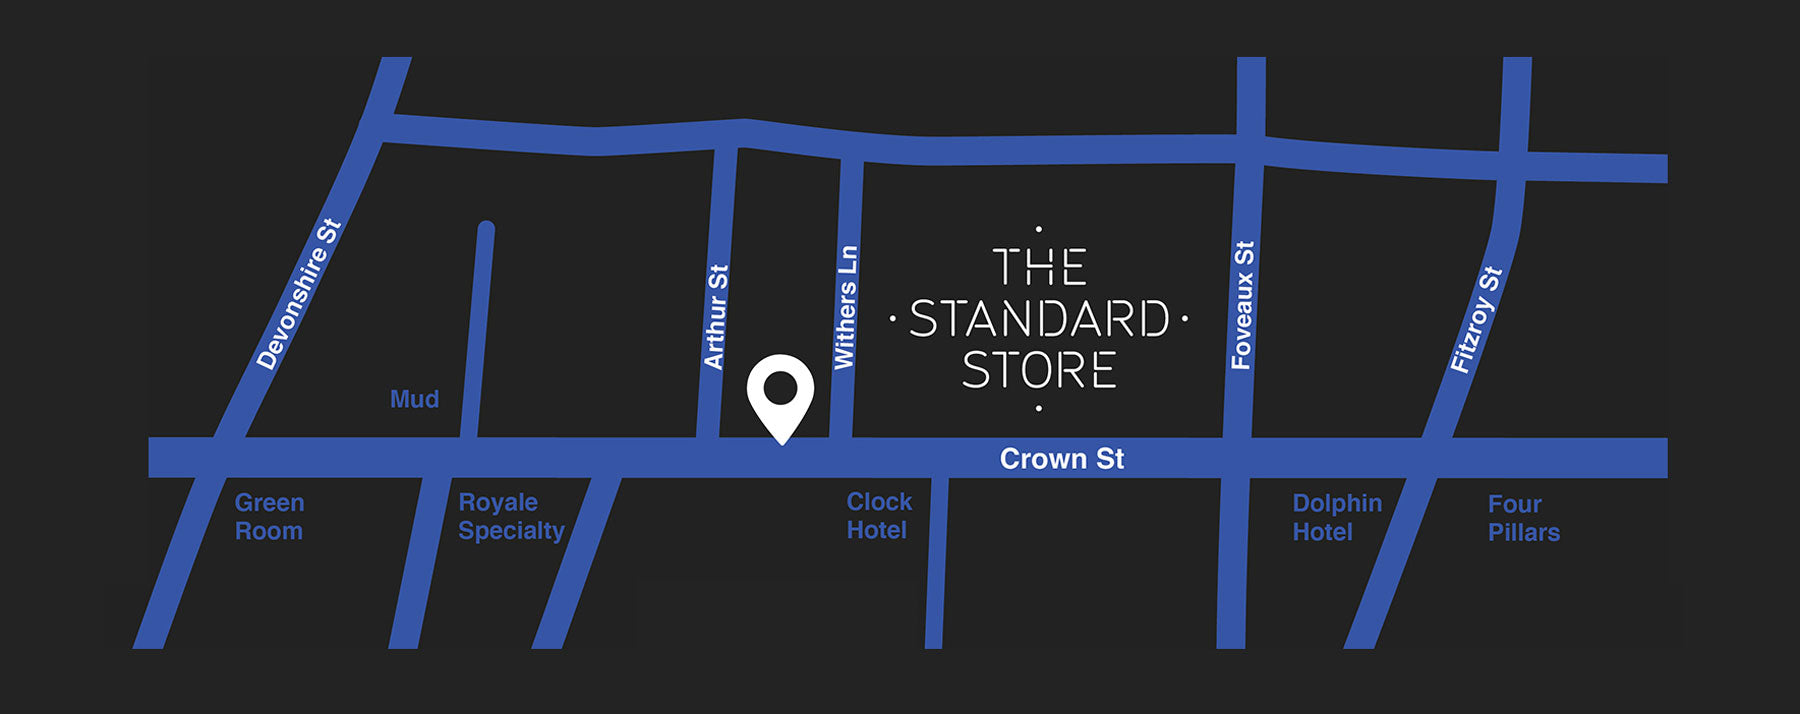 Standard Store Sydney Map